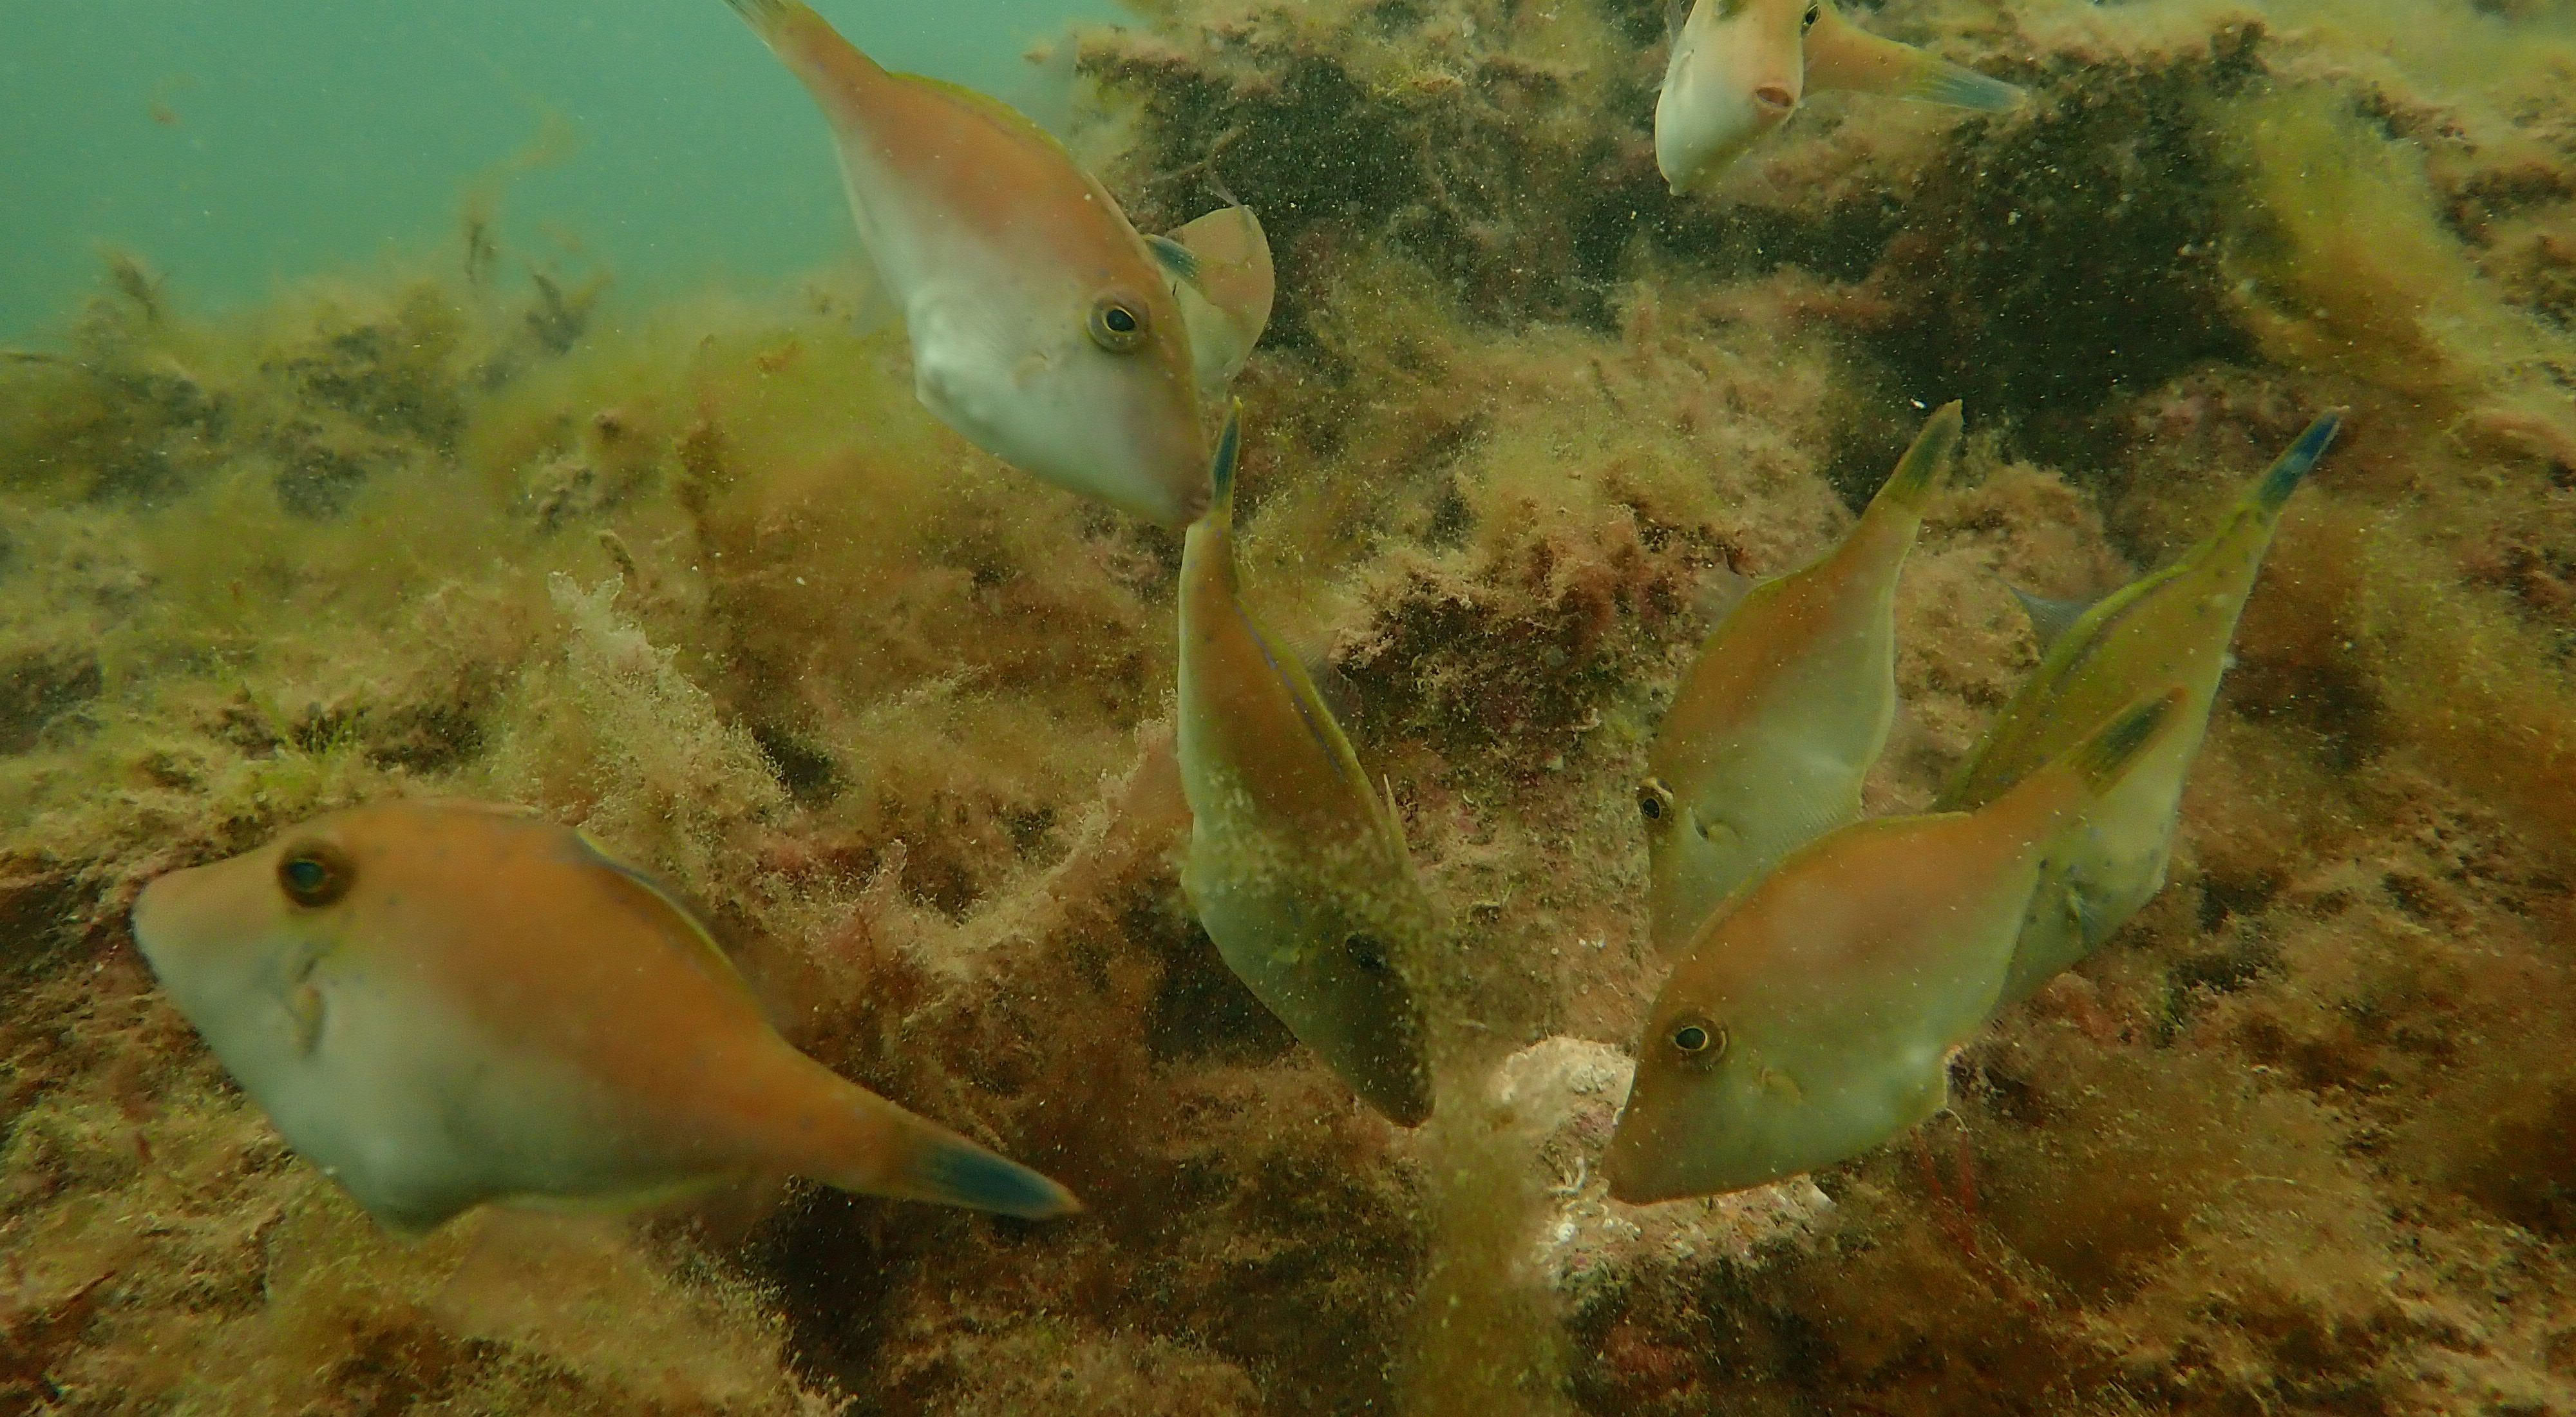 Close-up of fish swimming around reef under water.